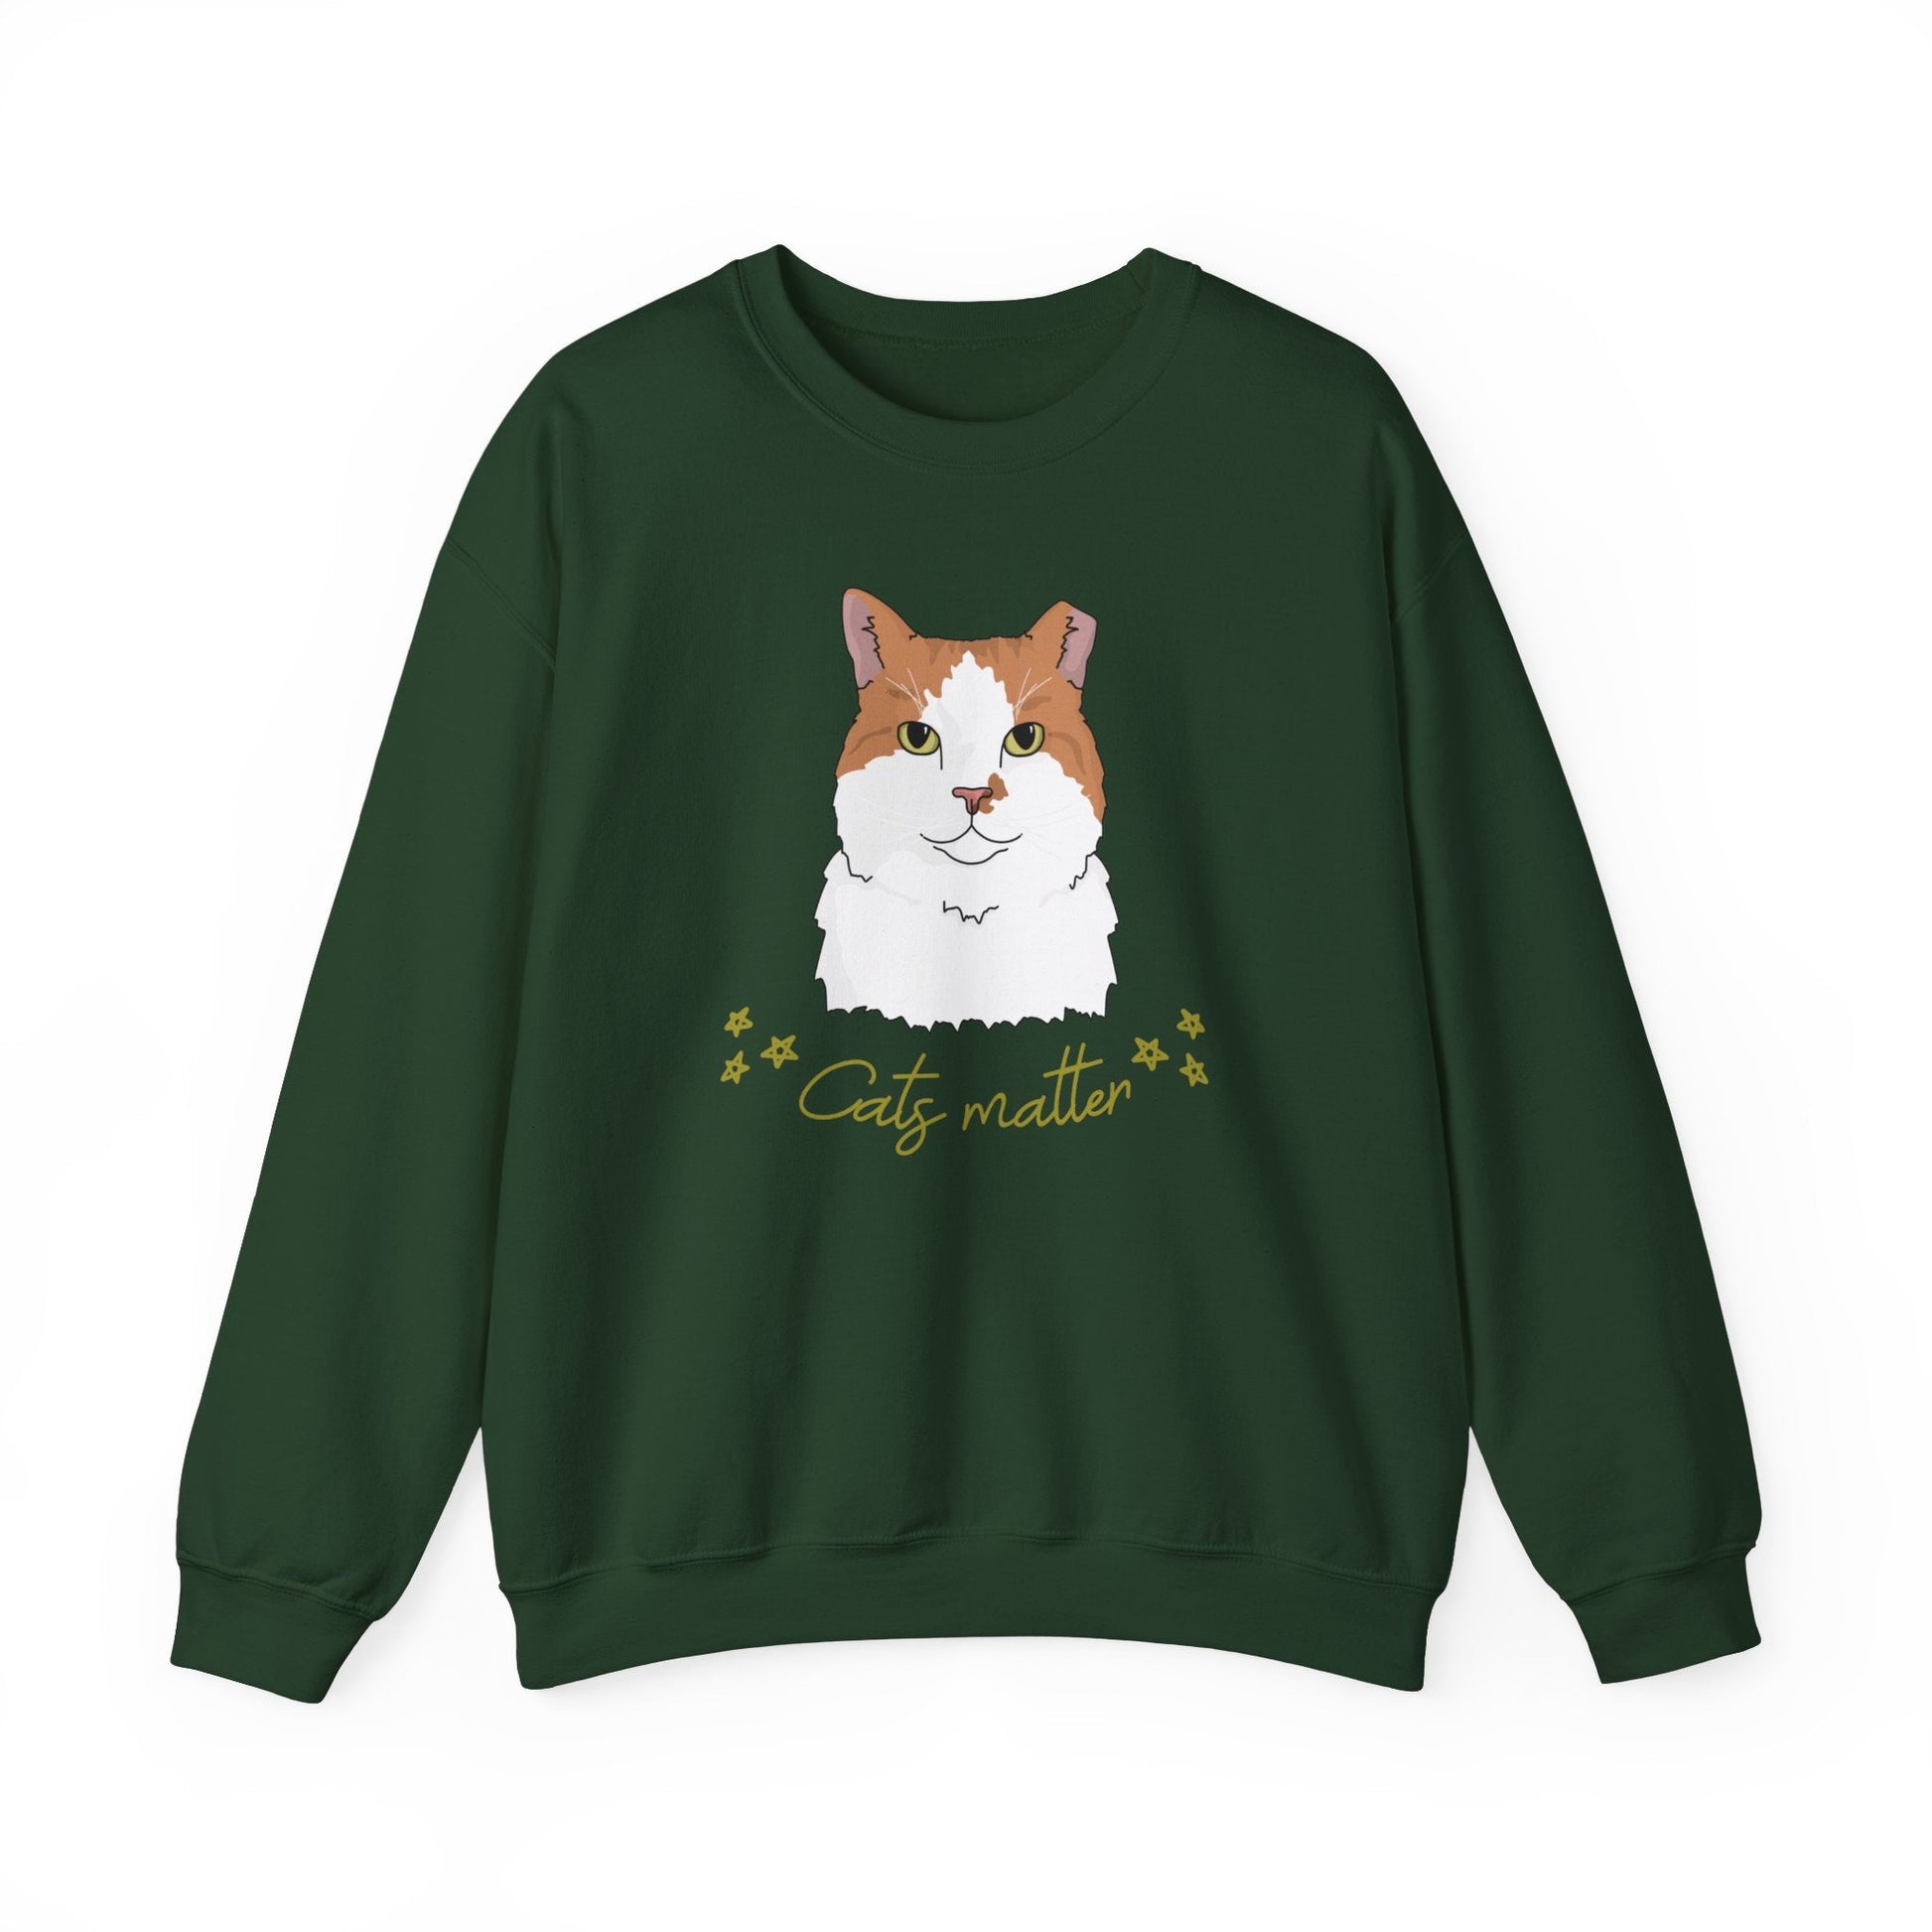 Cats Matter | Crewneck Sweatshirt - Detezi Designs-18148926874860596150